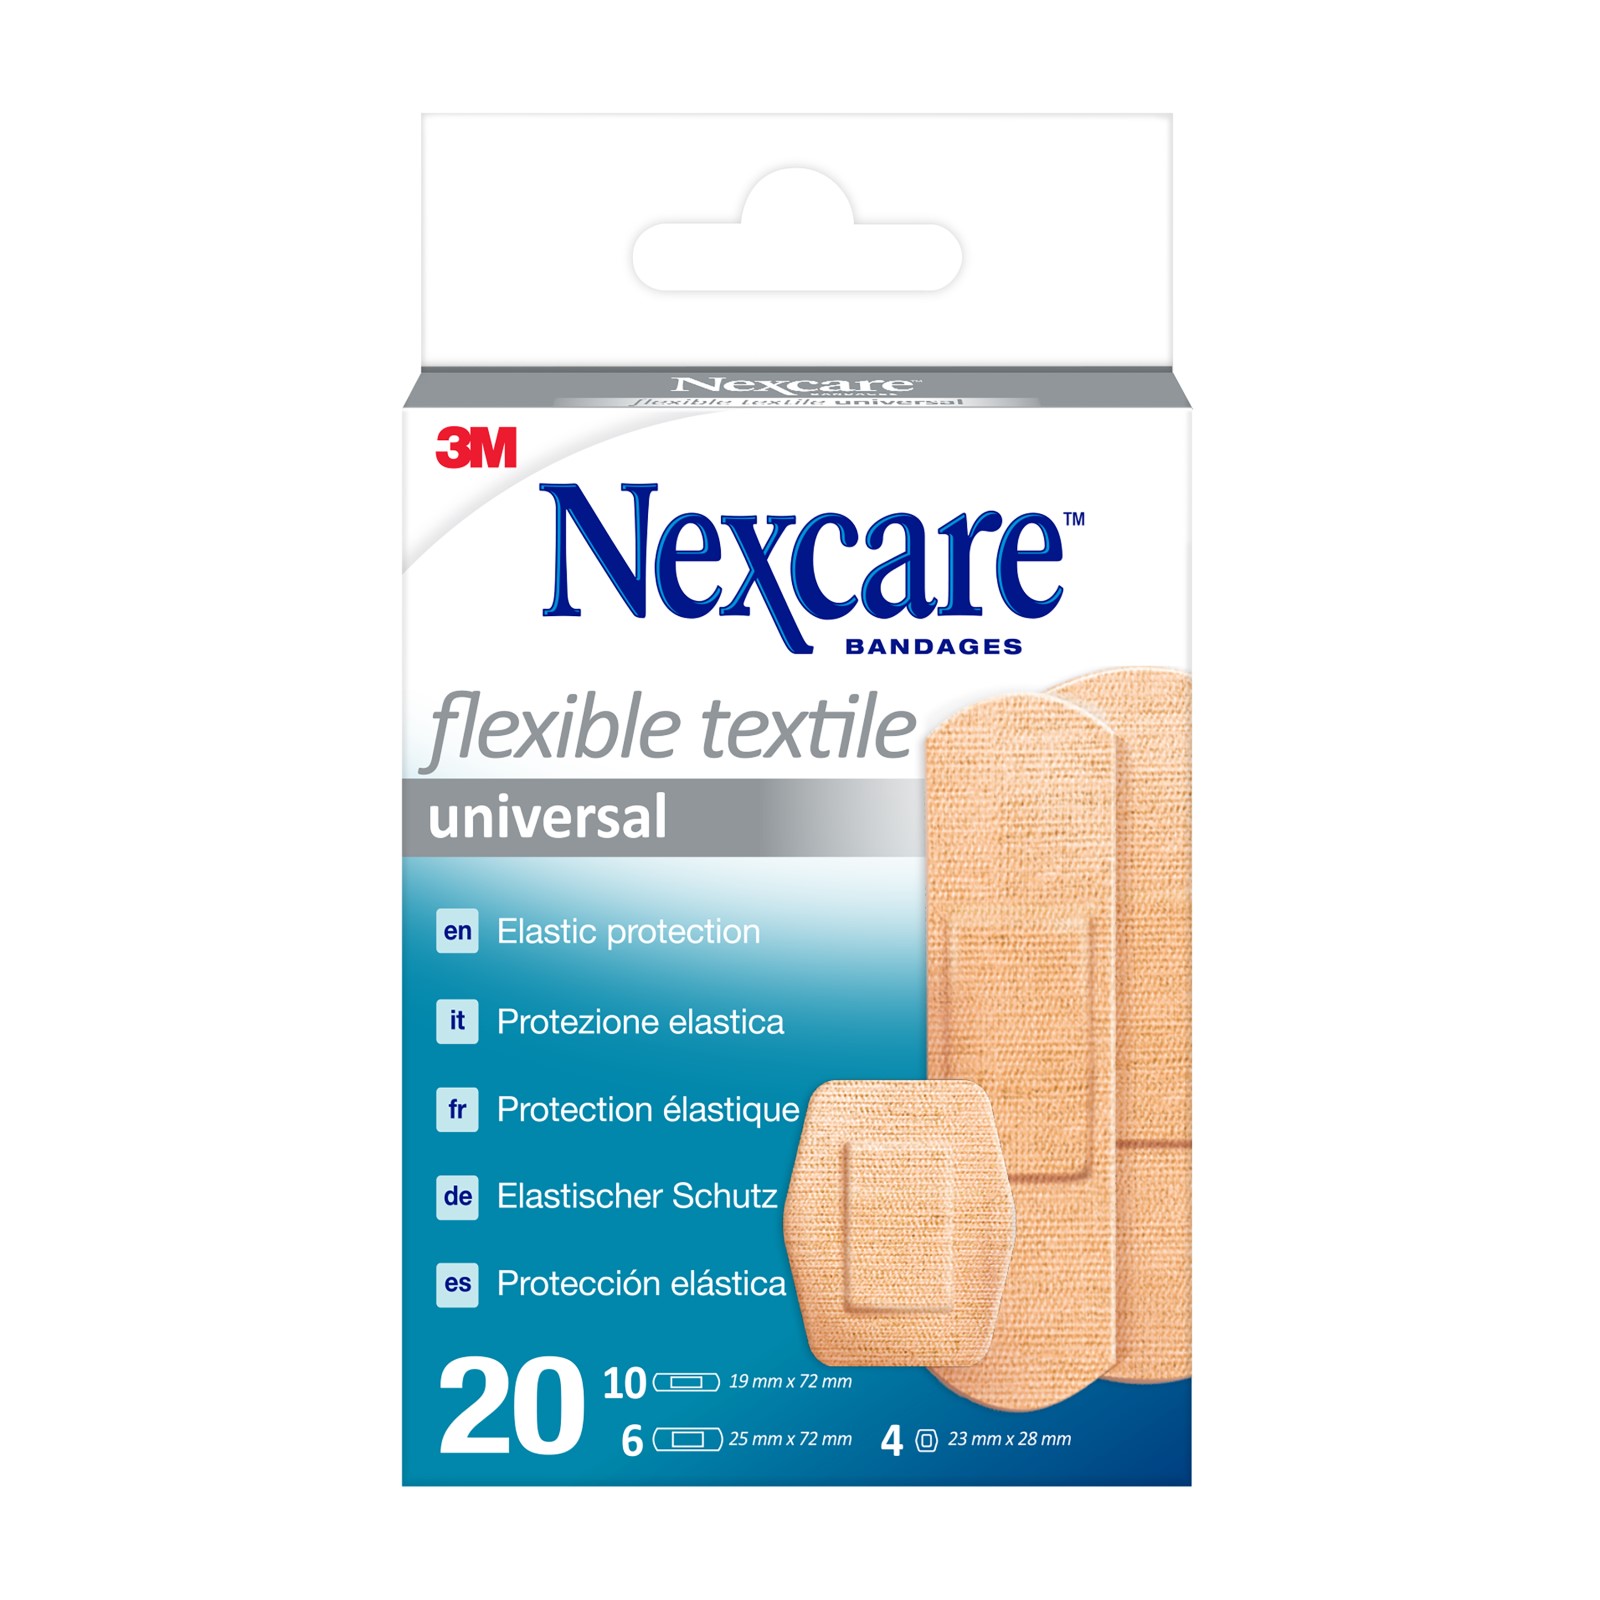 Nexcare™ flexible textile universal strips